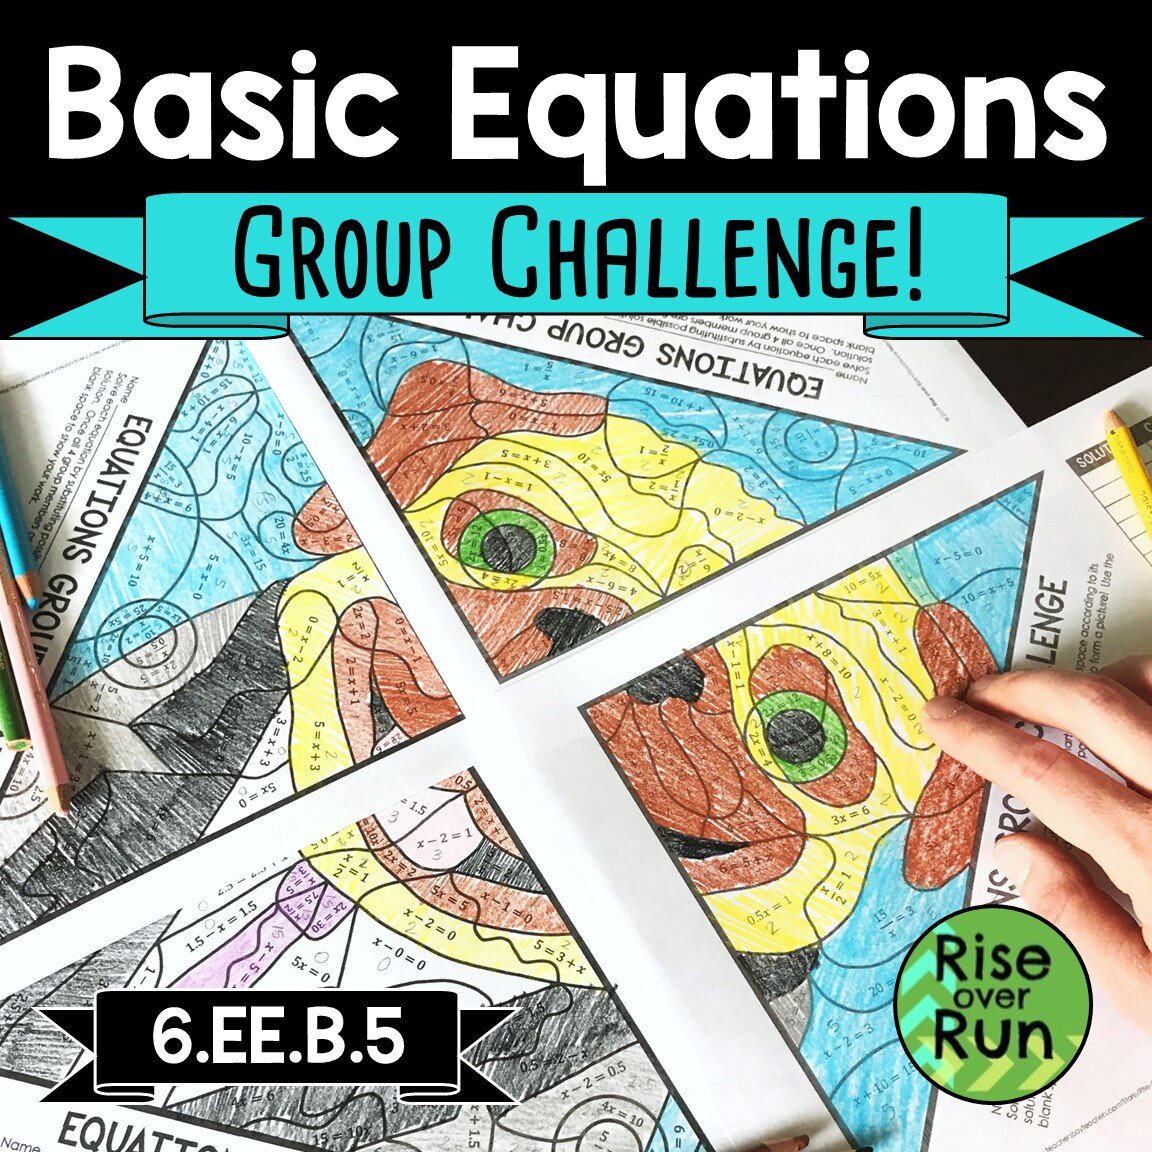 Basic Equations Group Challenge